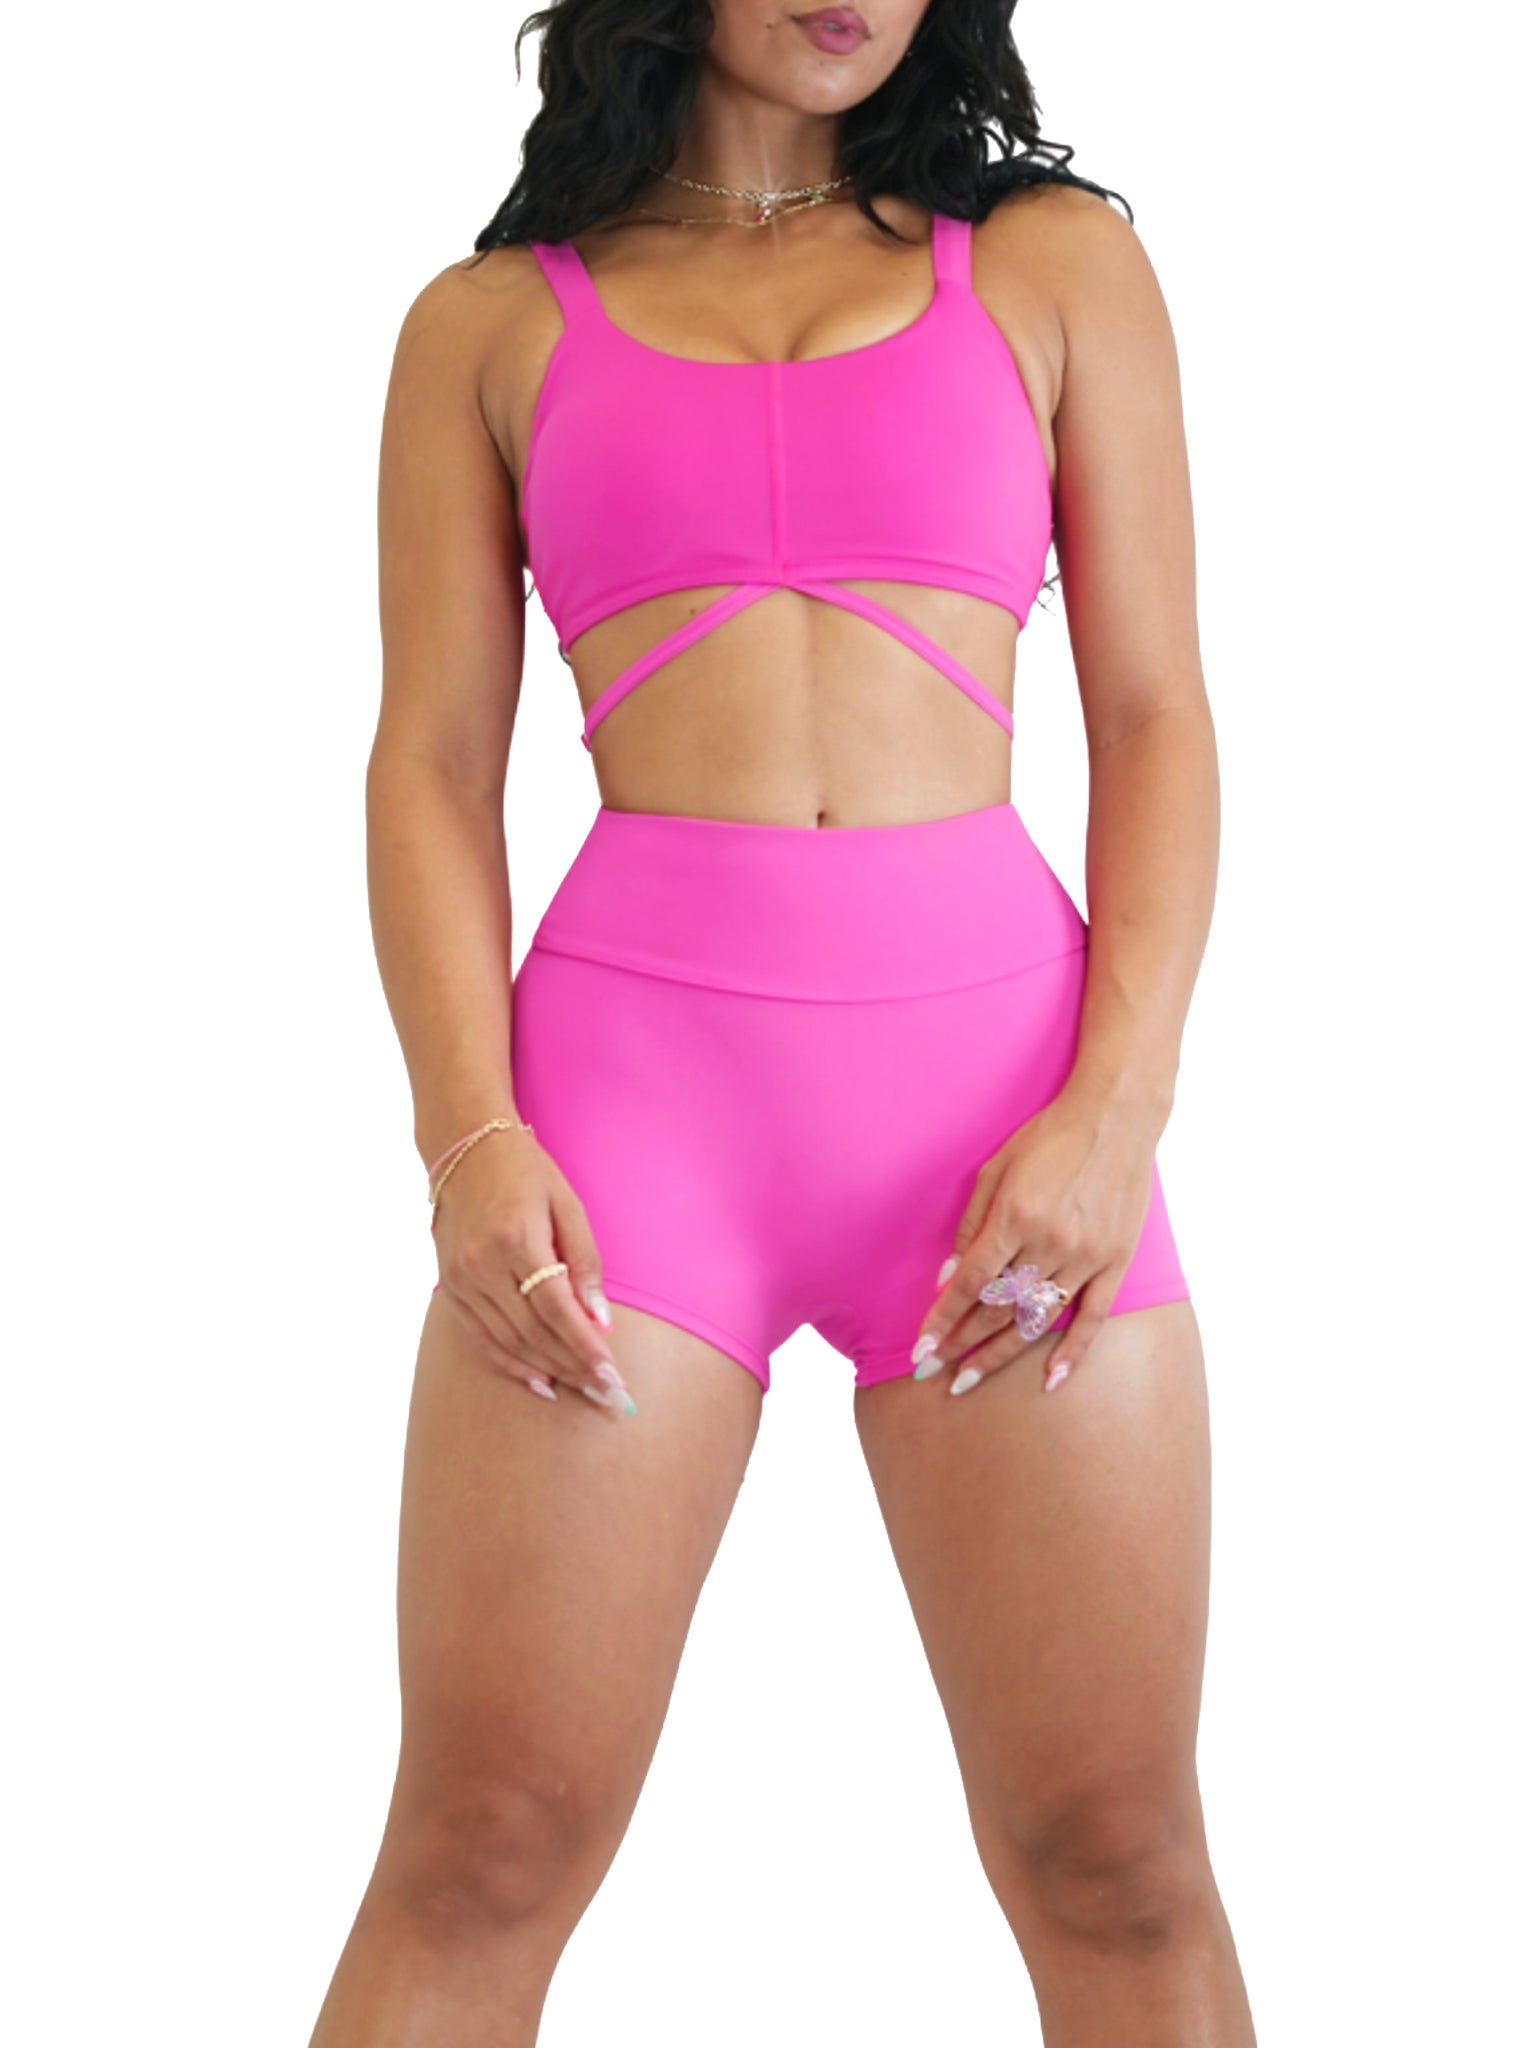 Body Strap Sports Bra (Hot Pink) – Fitness Fashioness